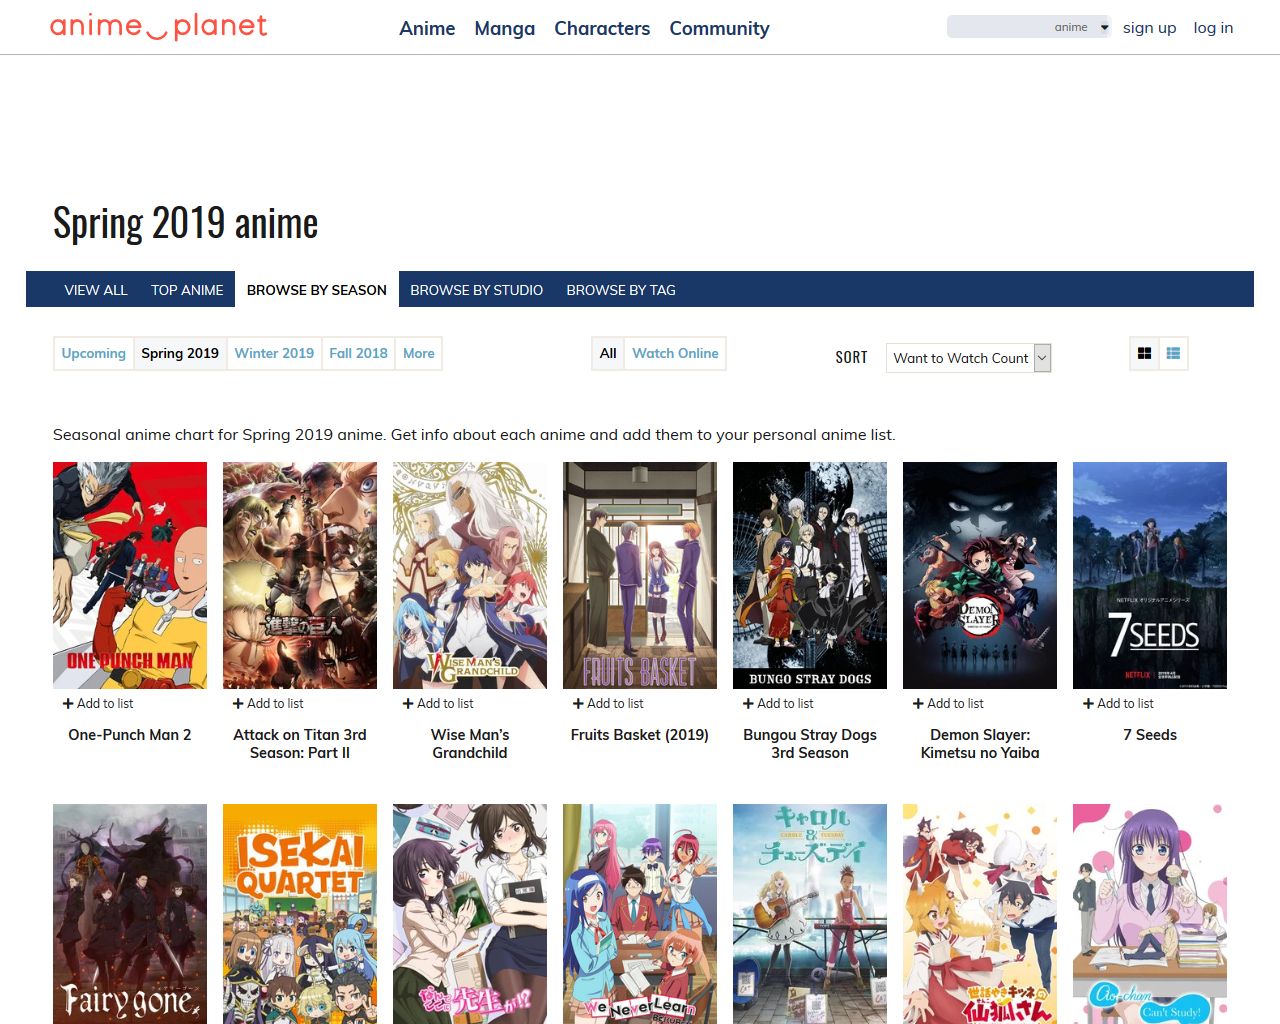 Anime-Planet: Anime, Manga  APK for Android Download